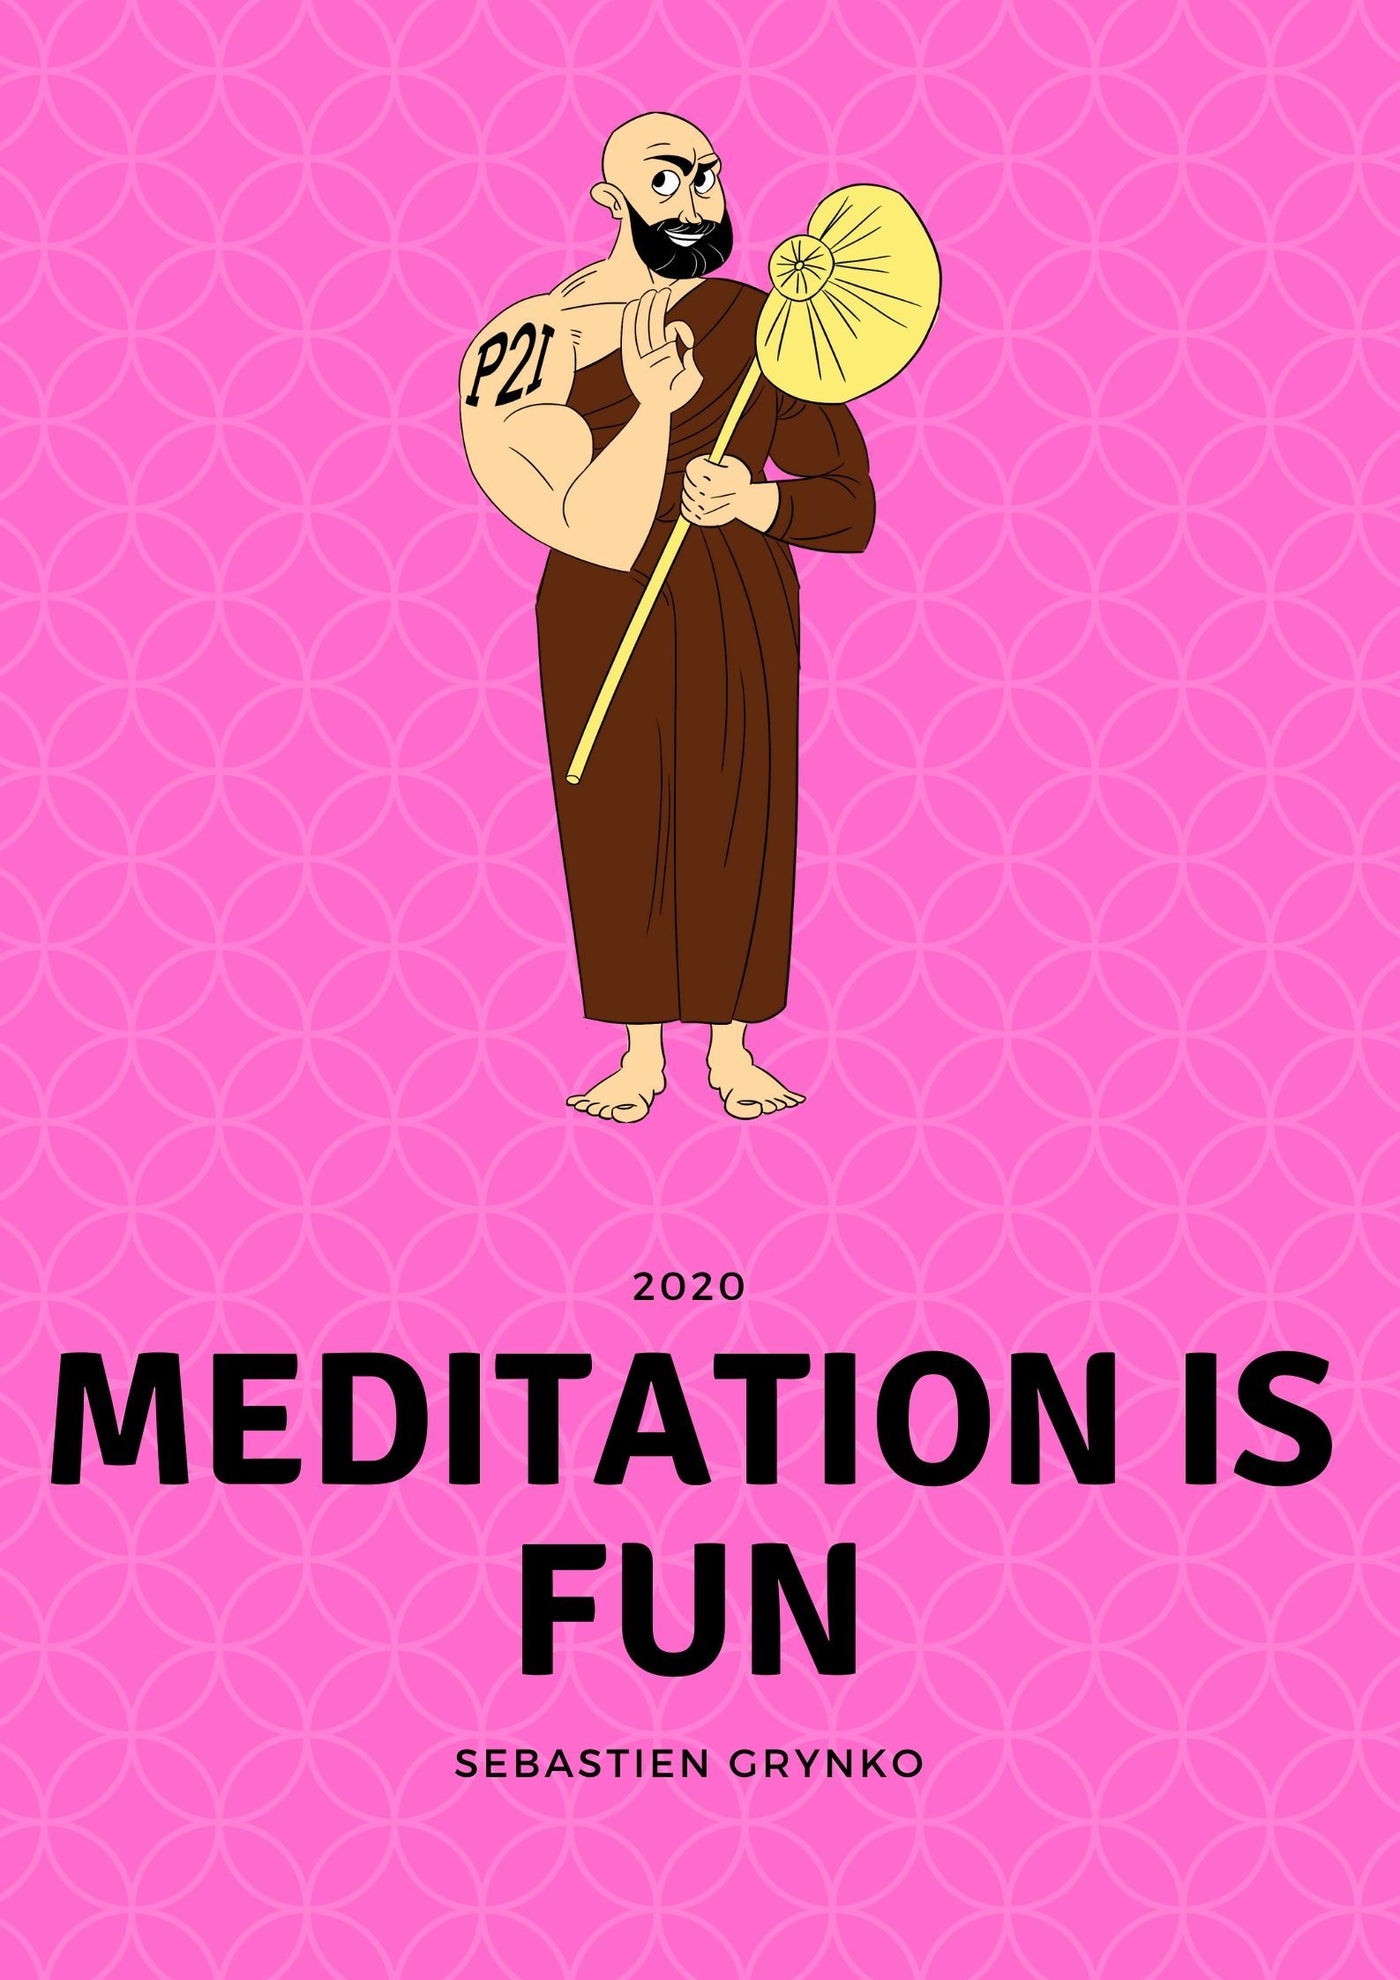 Make meditation fun